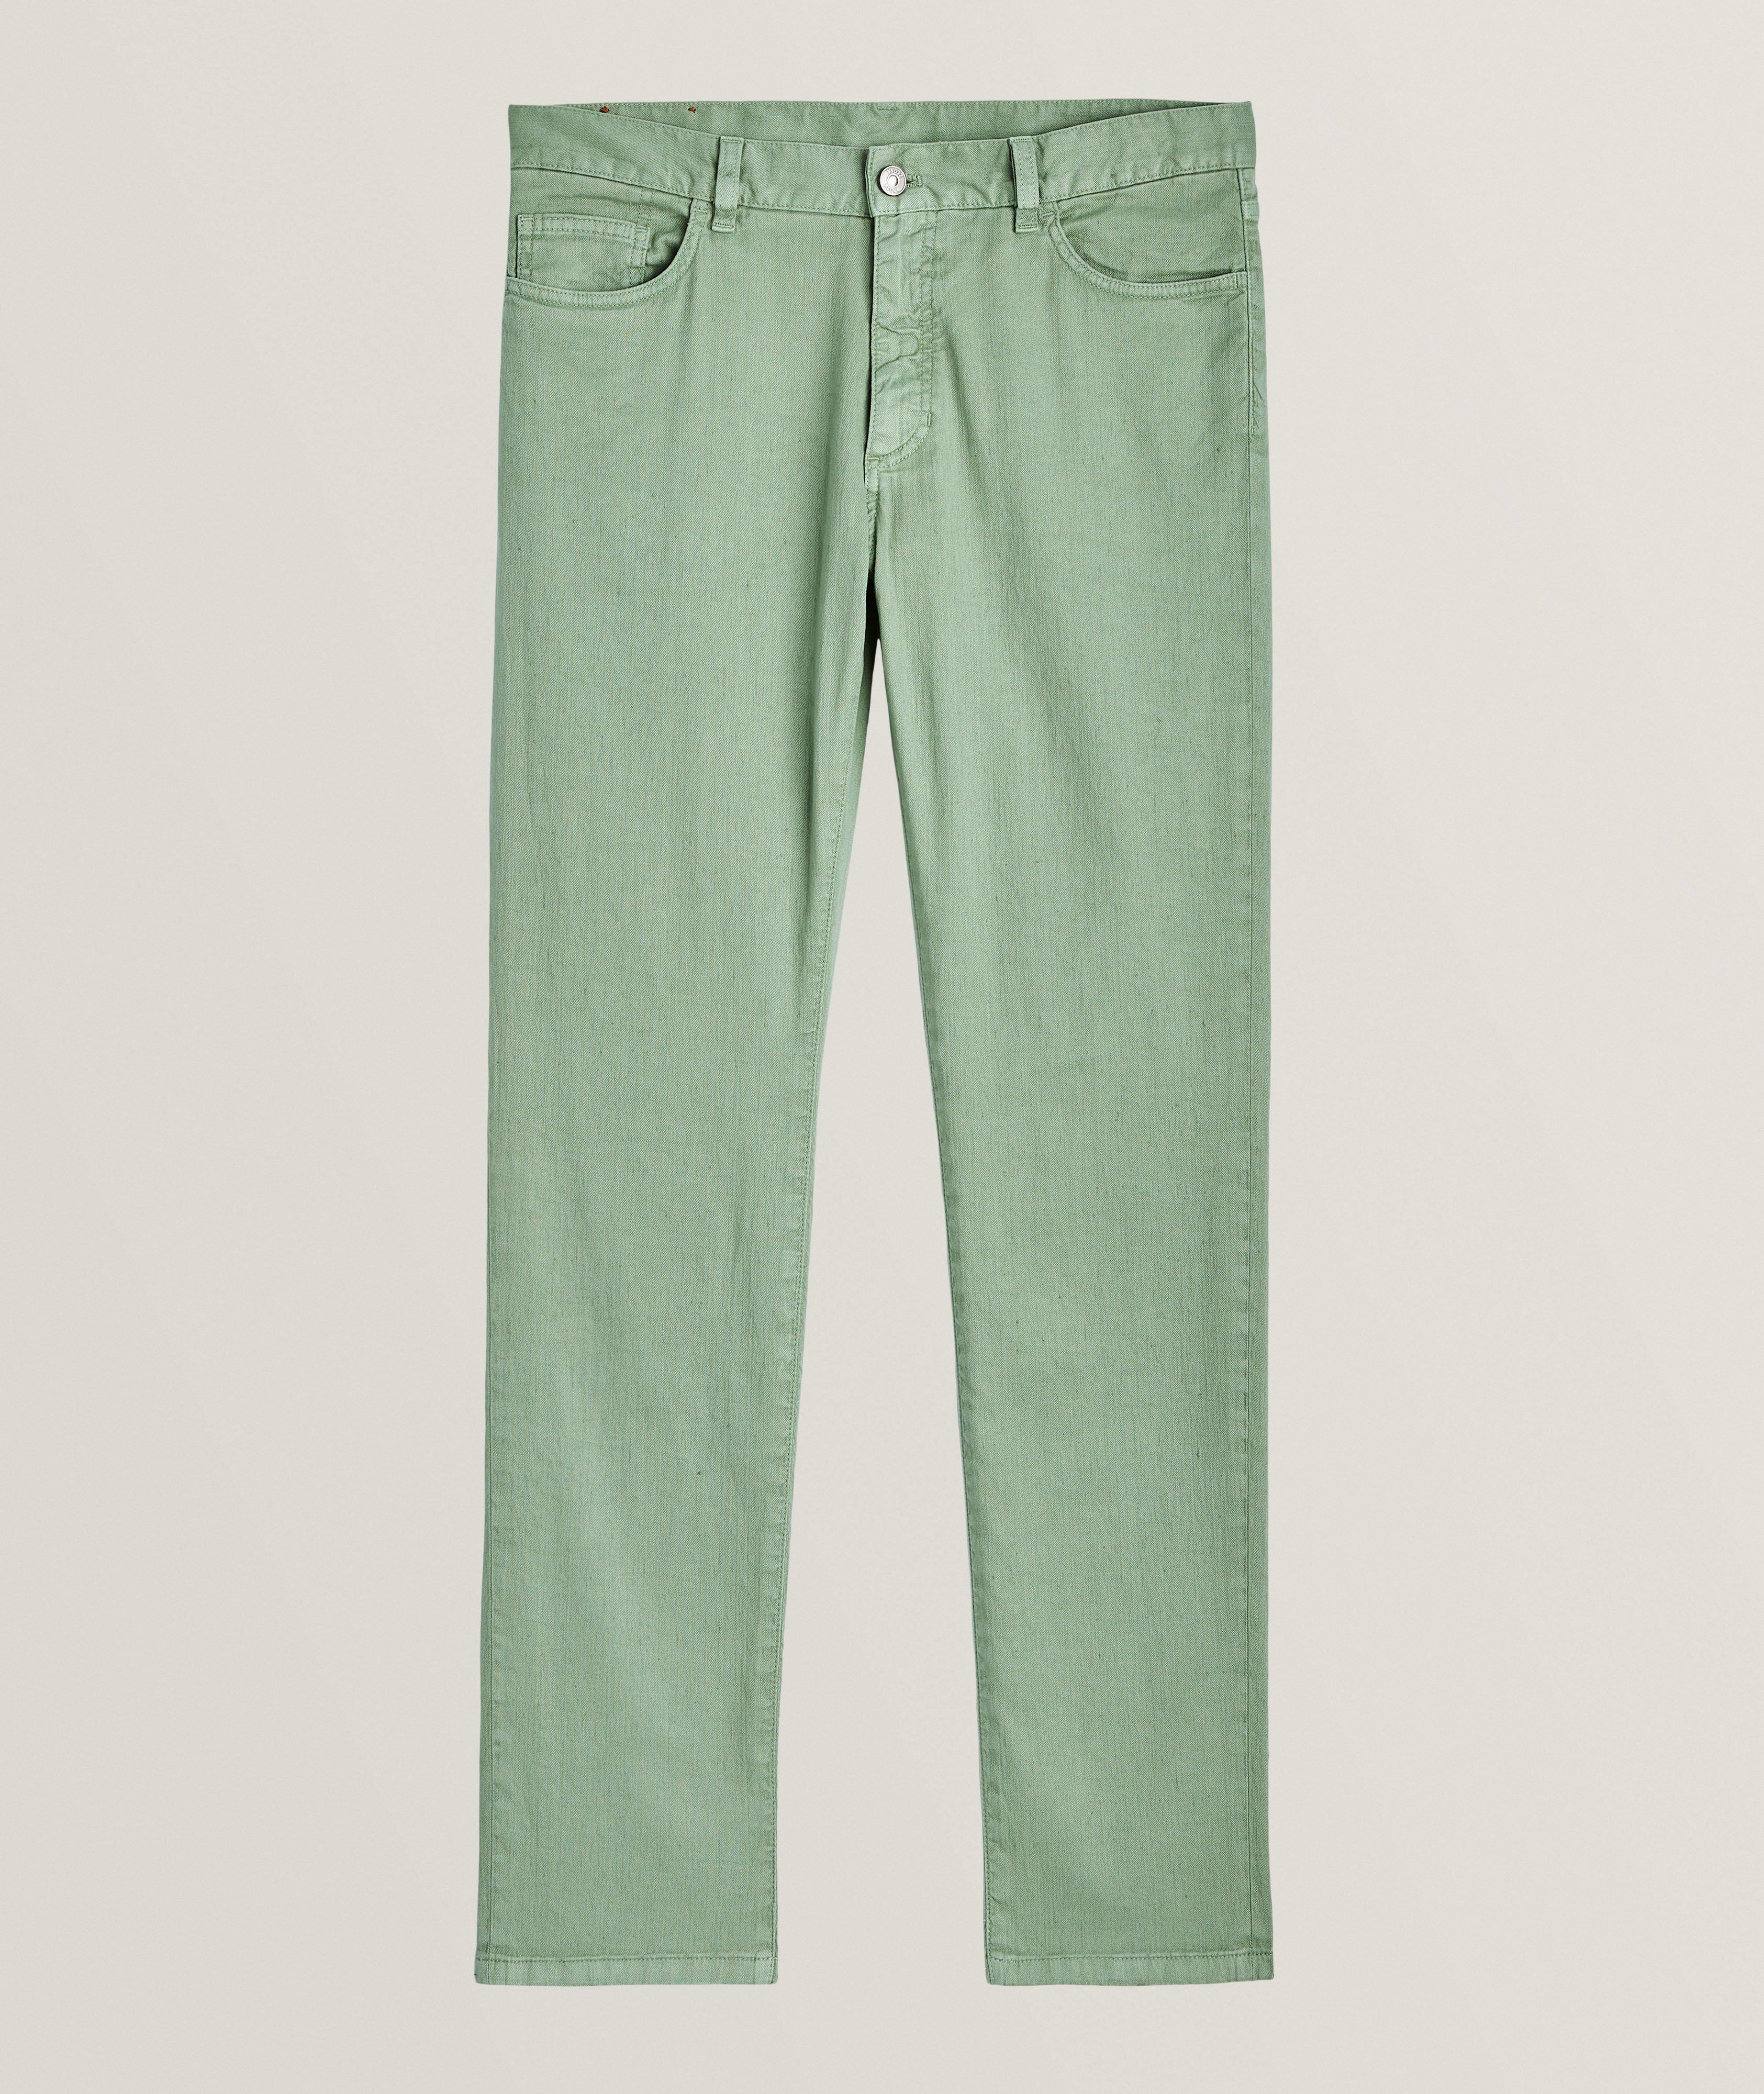 Pantalon Roccia en lin et en coton image 0